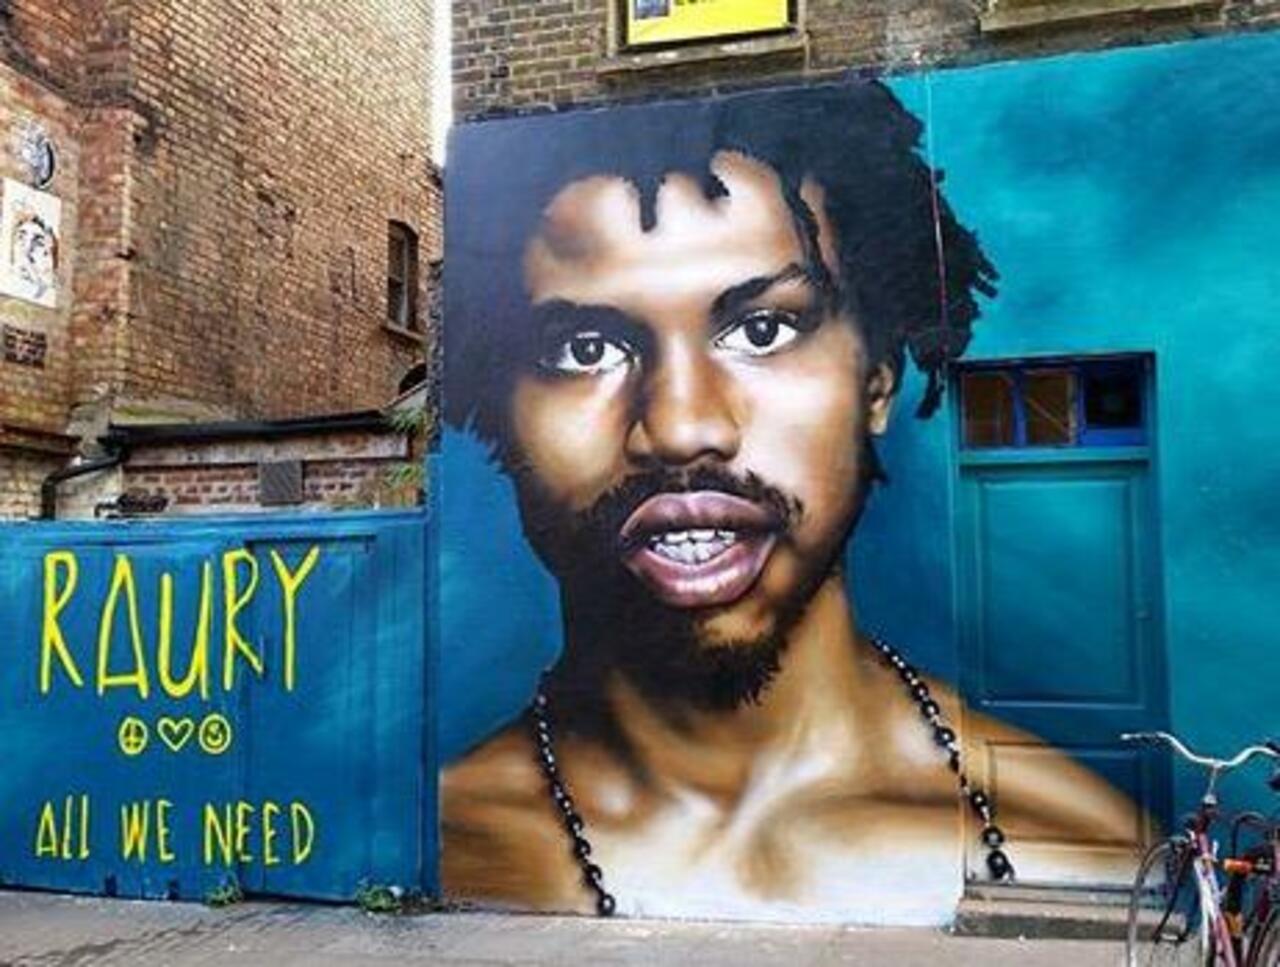 New Street Art of Raury by Olliver Switch in Brick Lane 

#art #graffiti #mural #streetart http://t.co/qzOewVqV6r